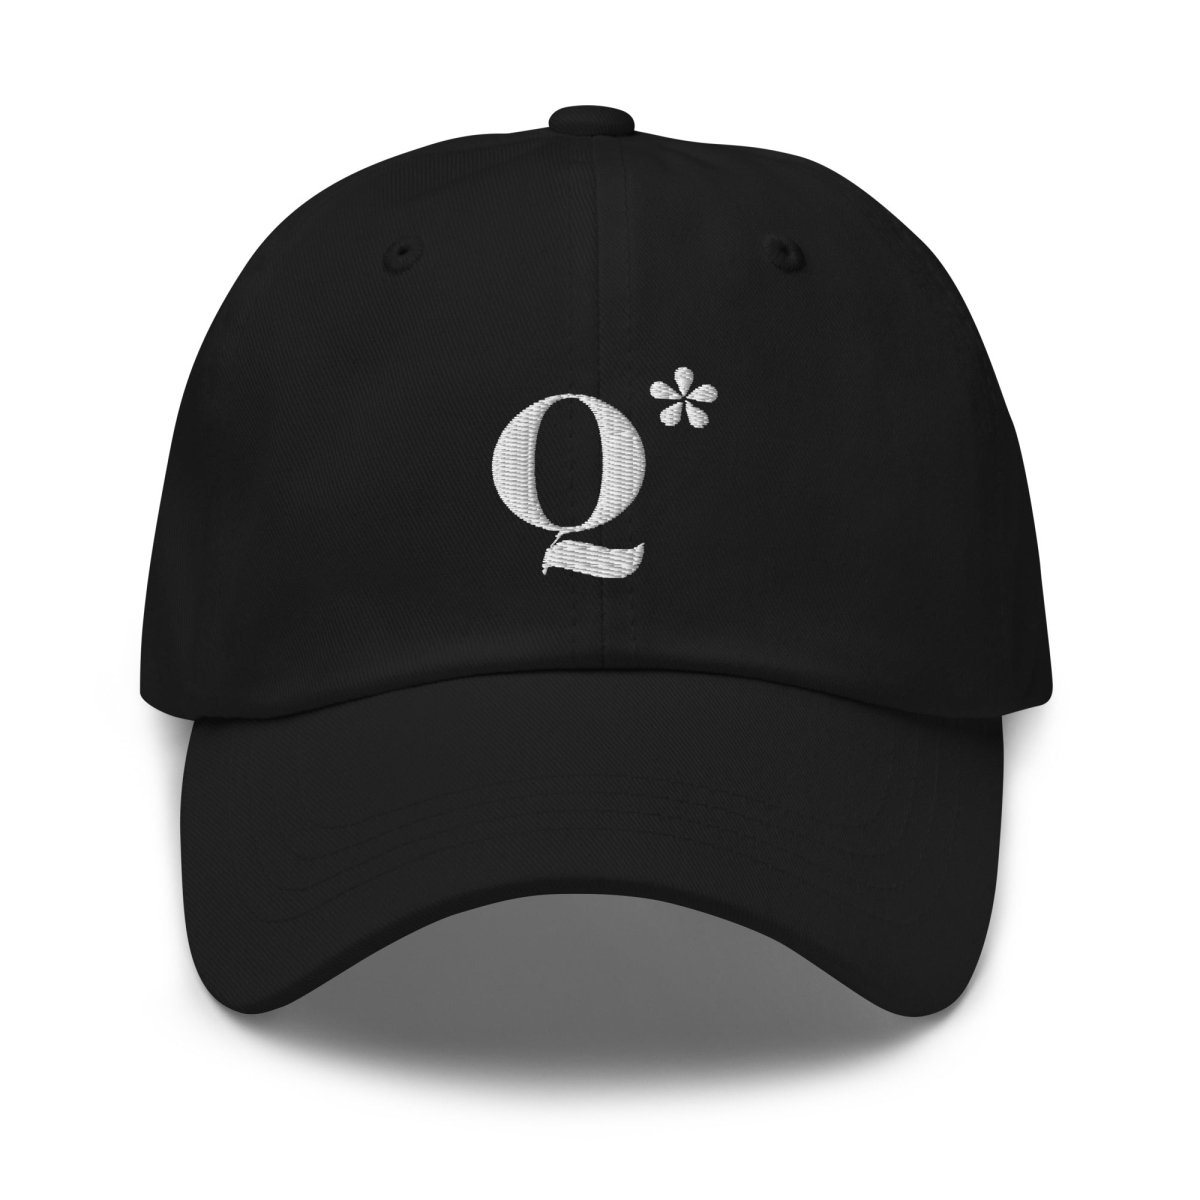 Q* (Q - Star) Embroidered Cap 3 - Black - AI Store